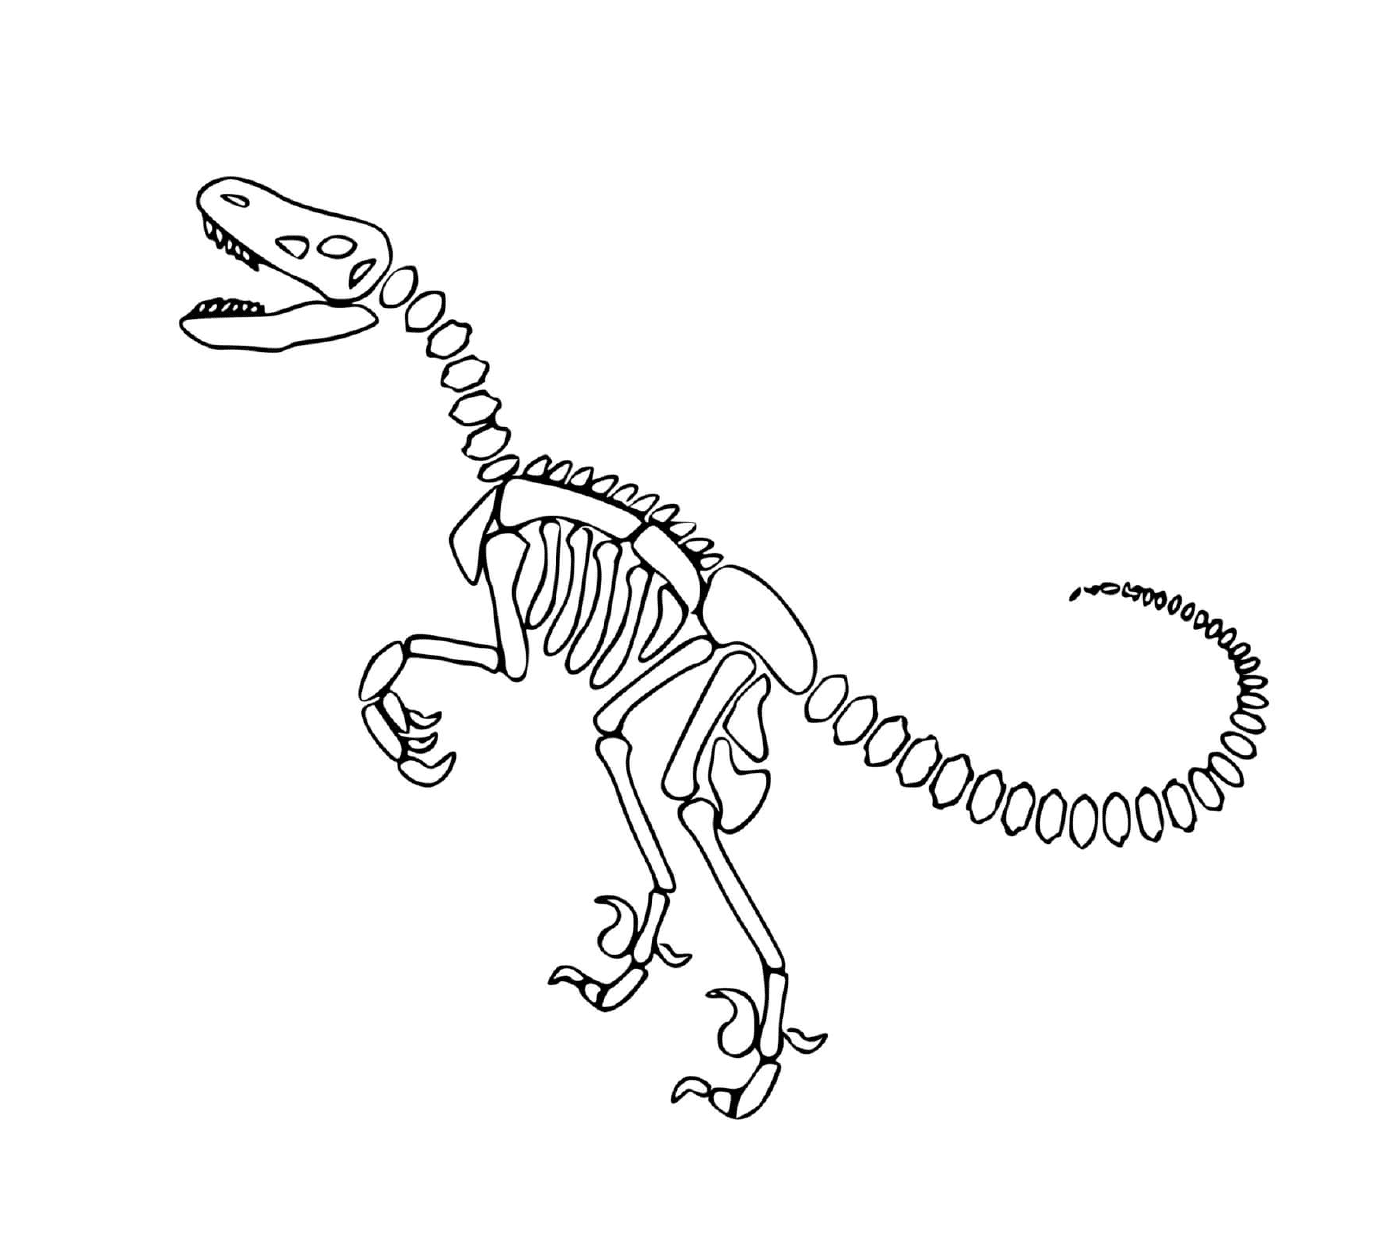  Dinosaur, skeleton, with spiral bone 